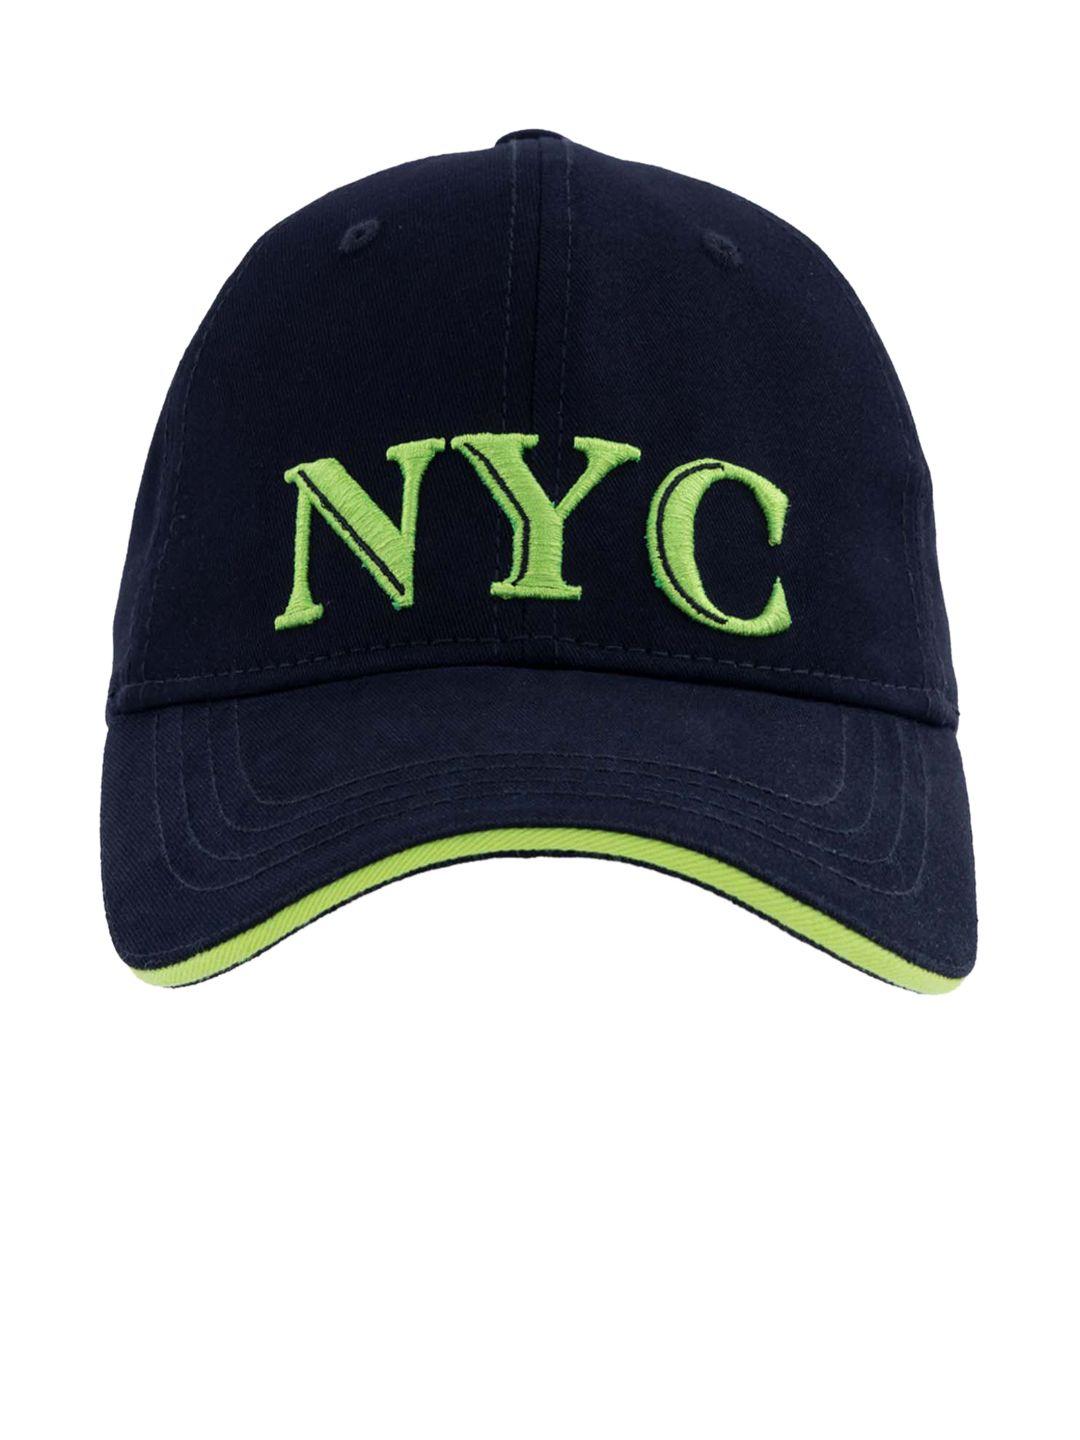 status quo men black & green embroidered cotton baseball cap